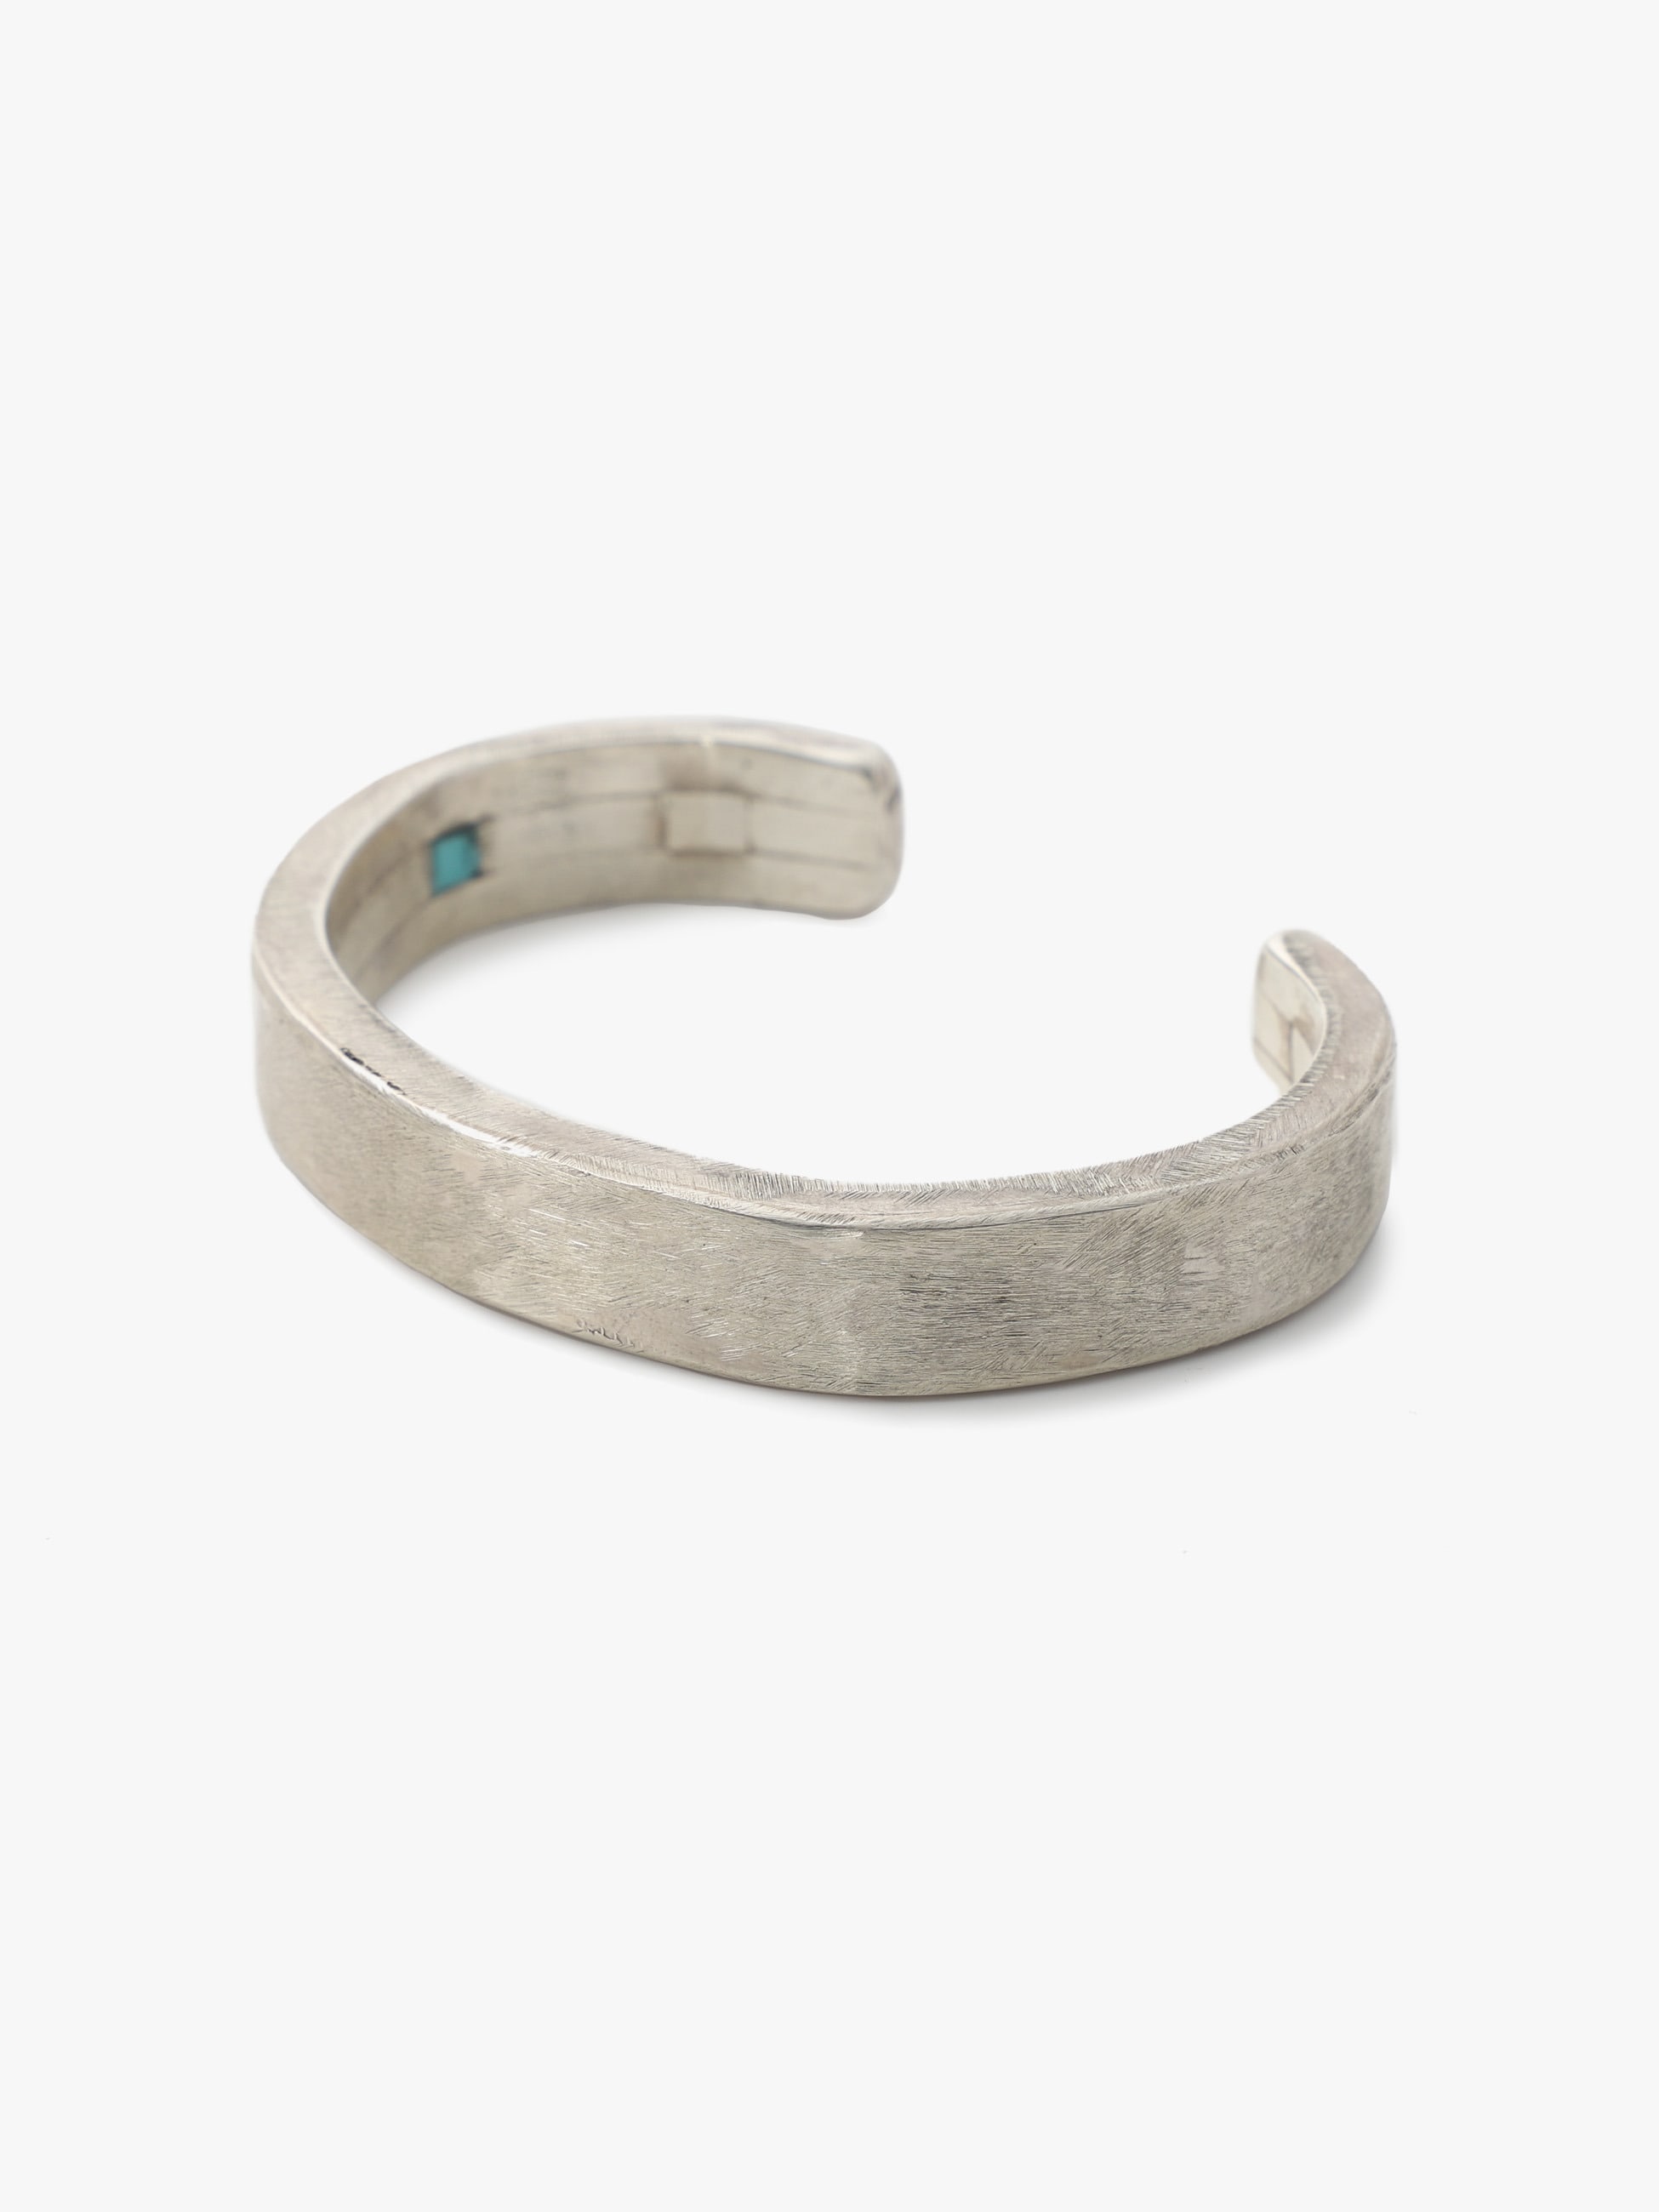 Square Turquoise Silver Bracelet